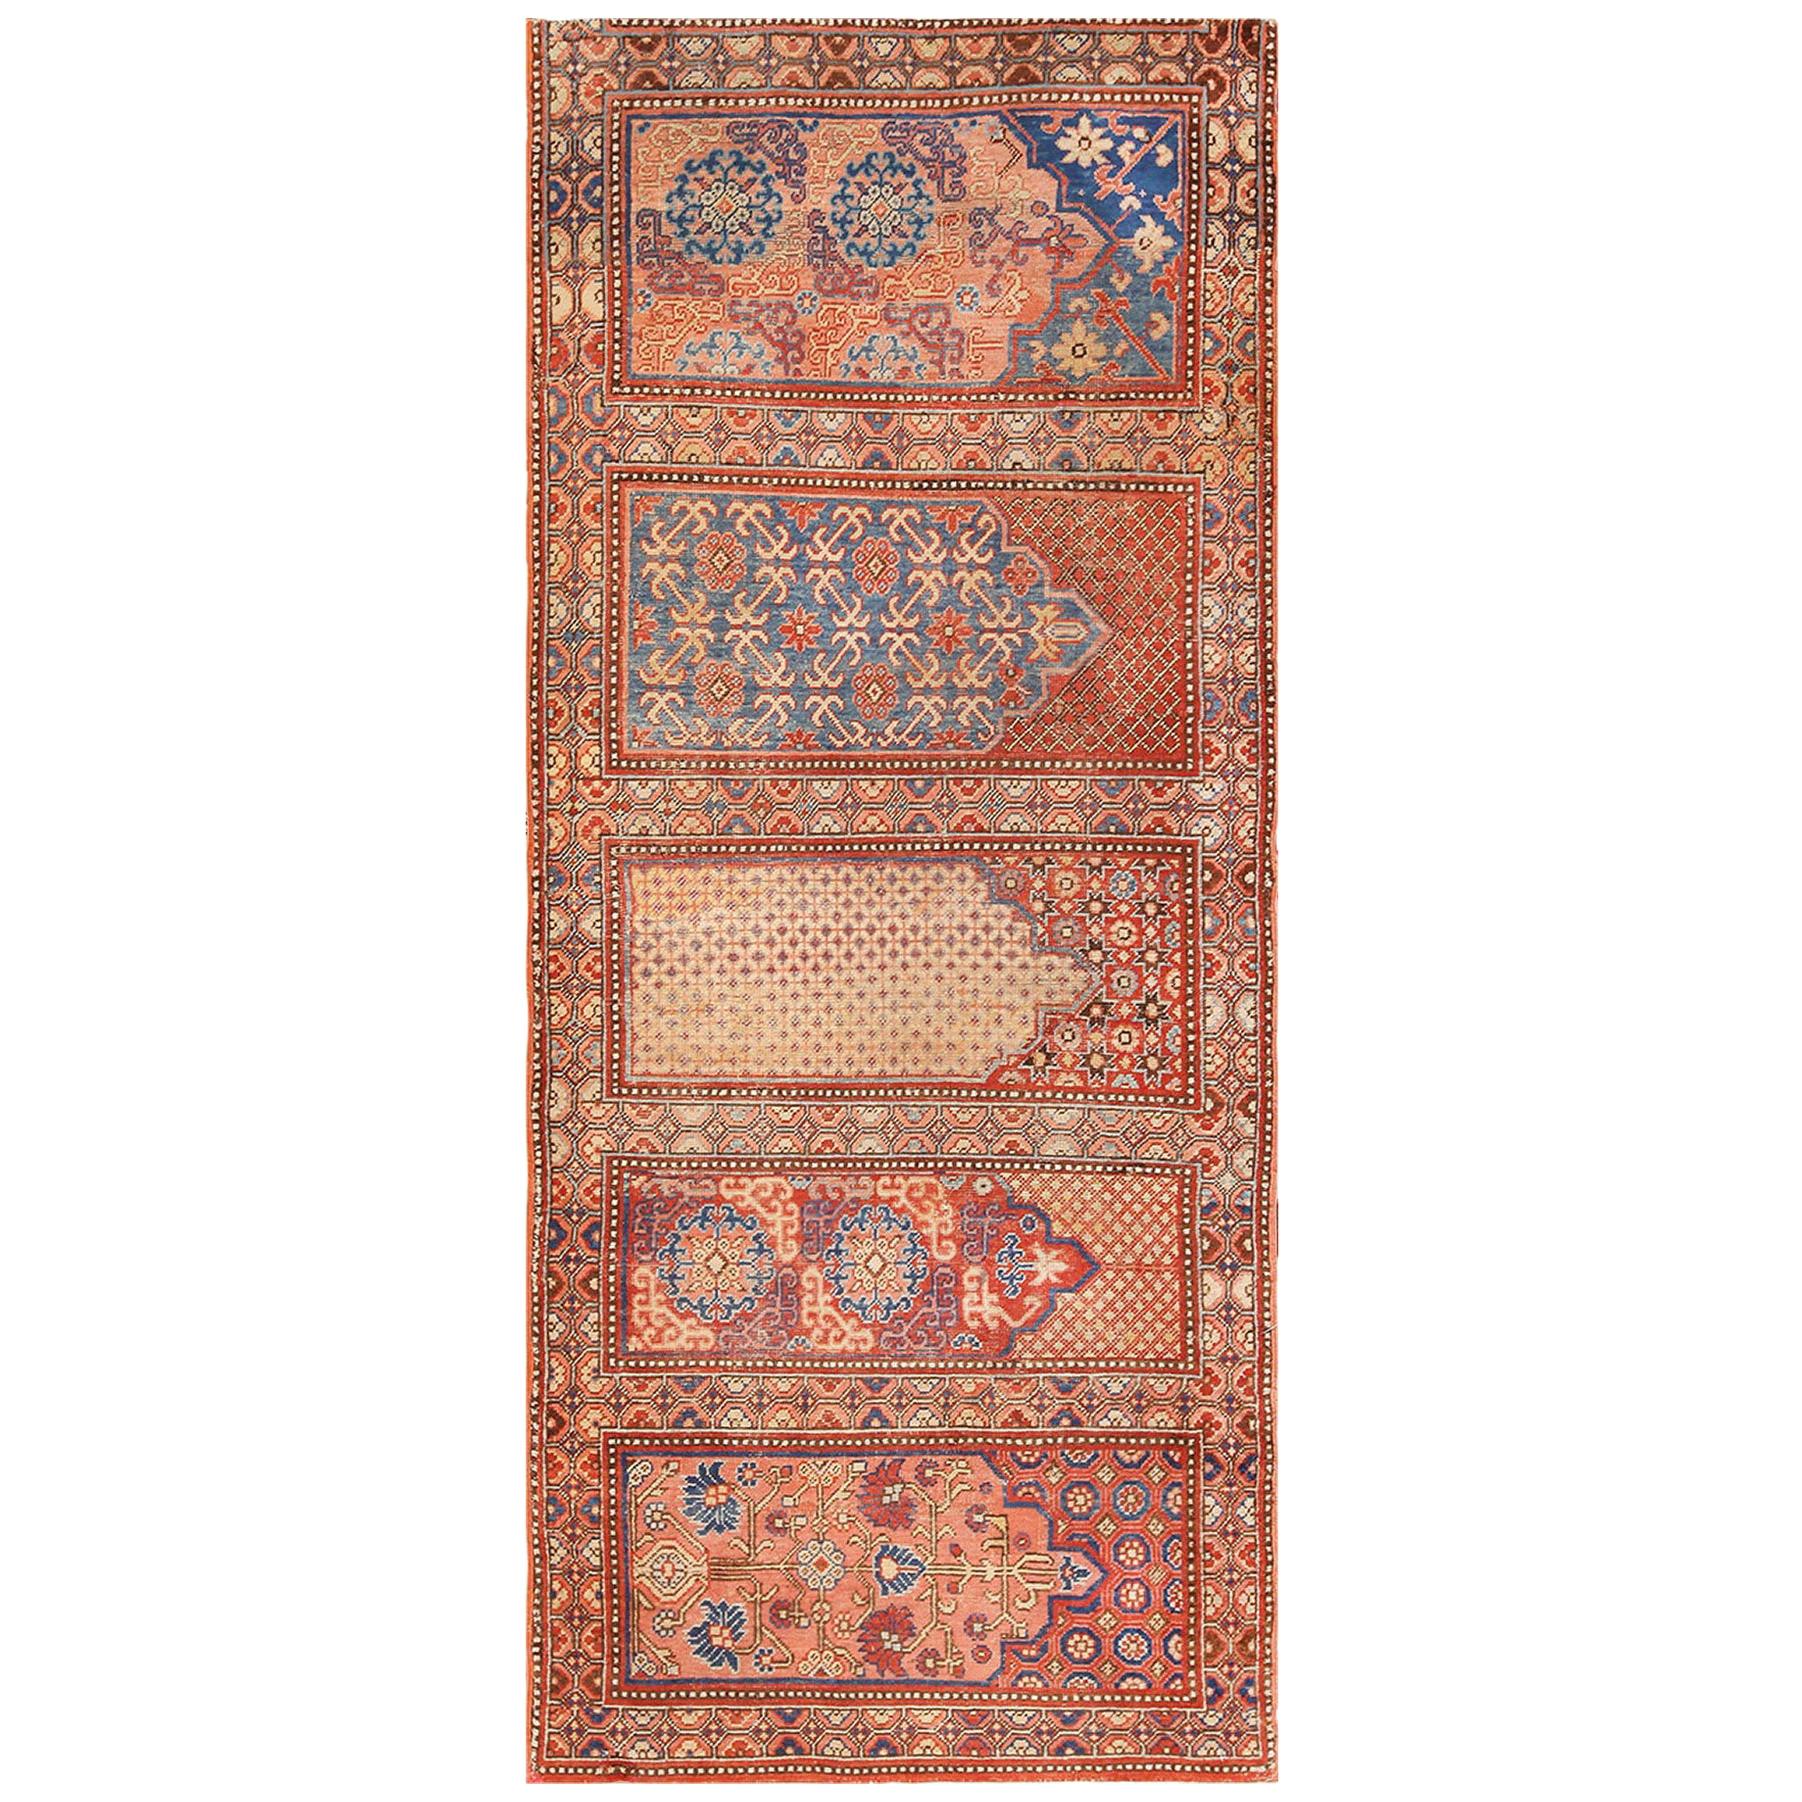 1800's Khotan Saf Prayer Rug from East Turkestan. Size: 8 ft 5 in x 3 ft 9 in 